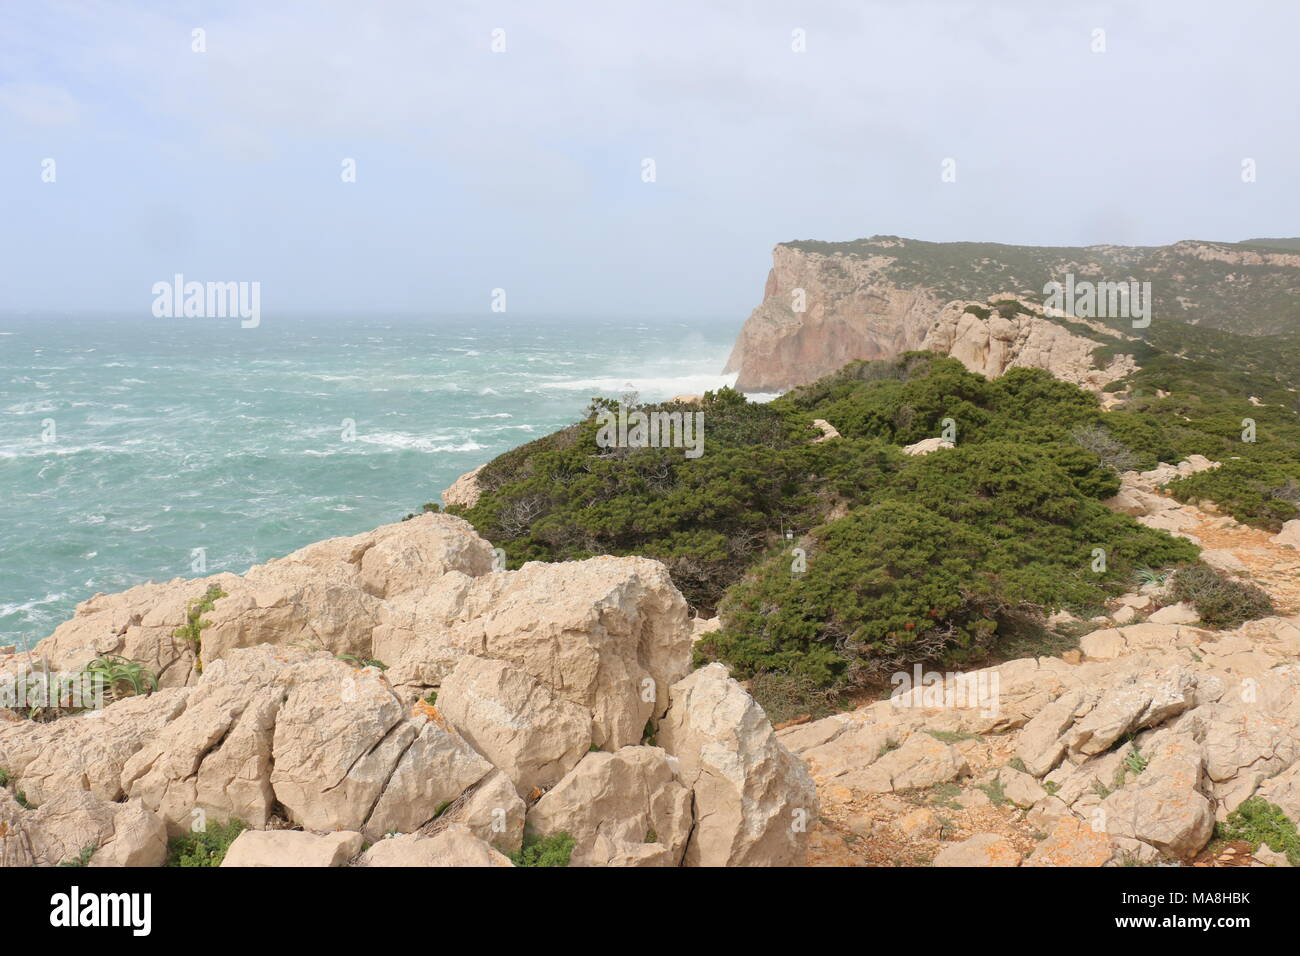 Stürmische Meer in Sardinien - Capo Caccia Klippen - schöne Seascape Stockfoto